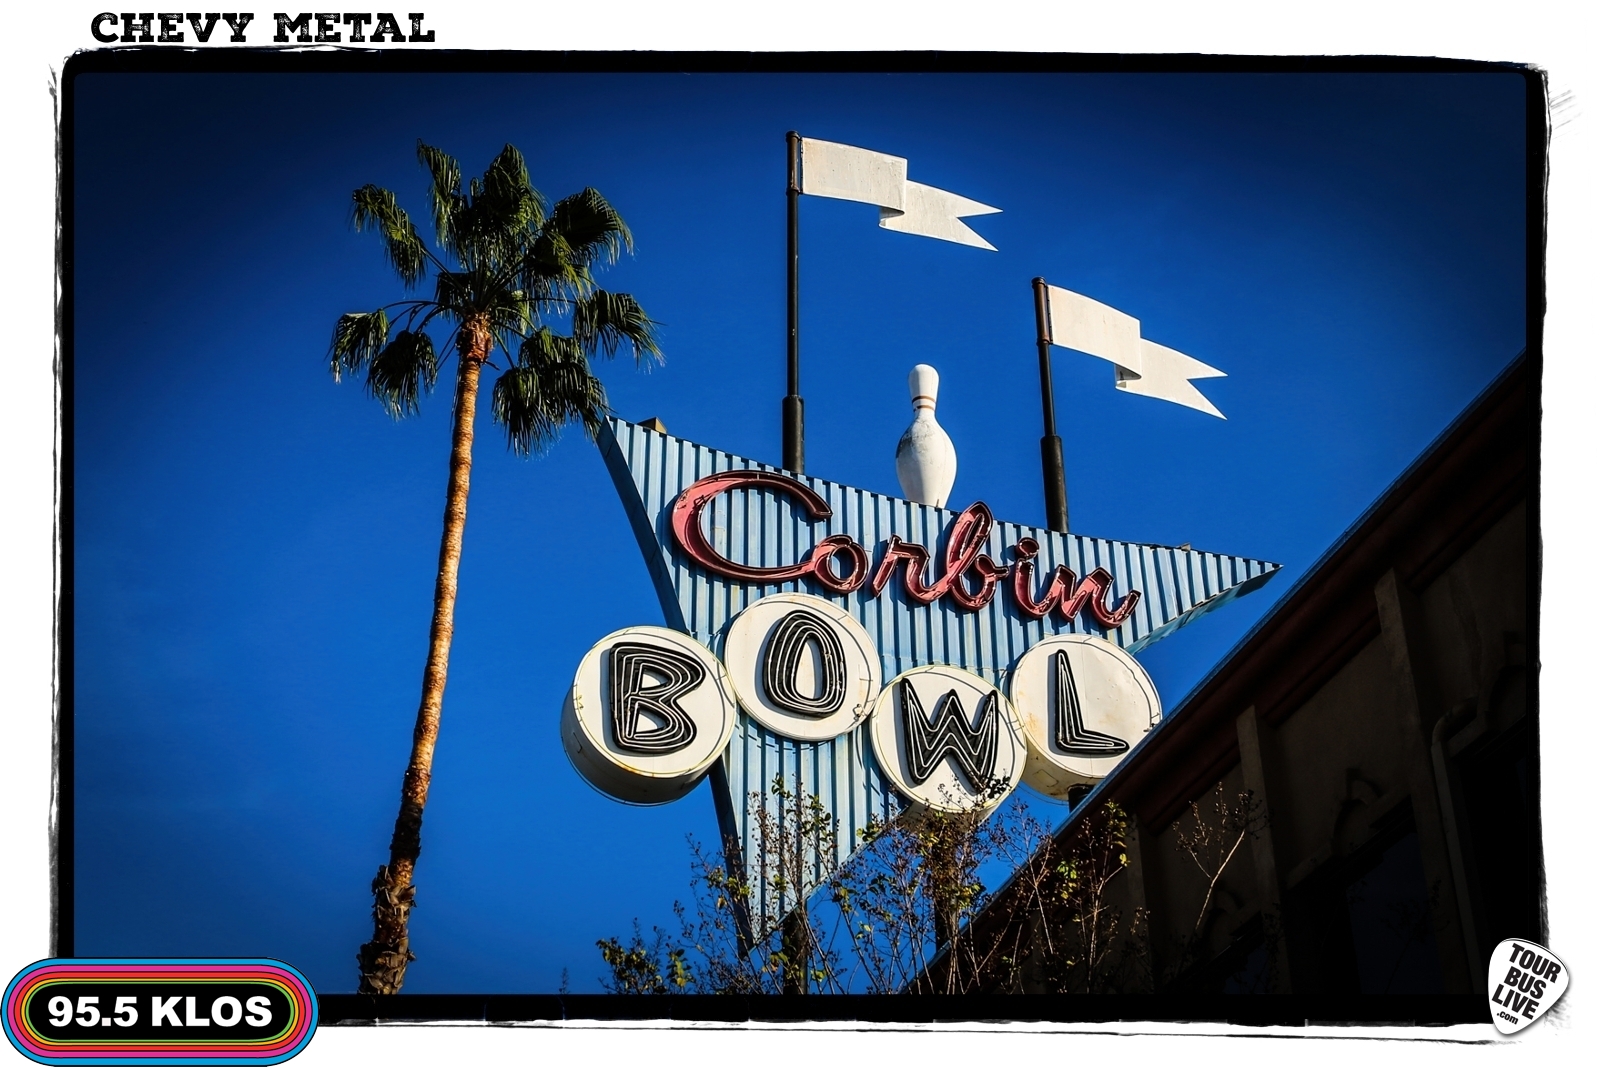 CHEVY METAL, Corbin Bowl, Tarzana, CA., 1/12/18. © 2018 TourBusLive.com